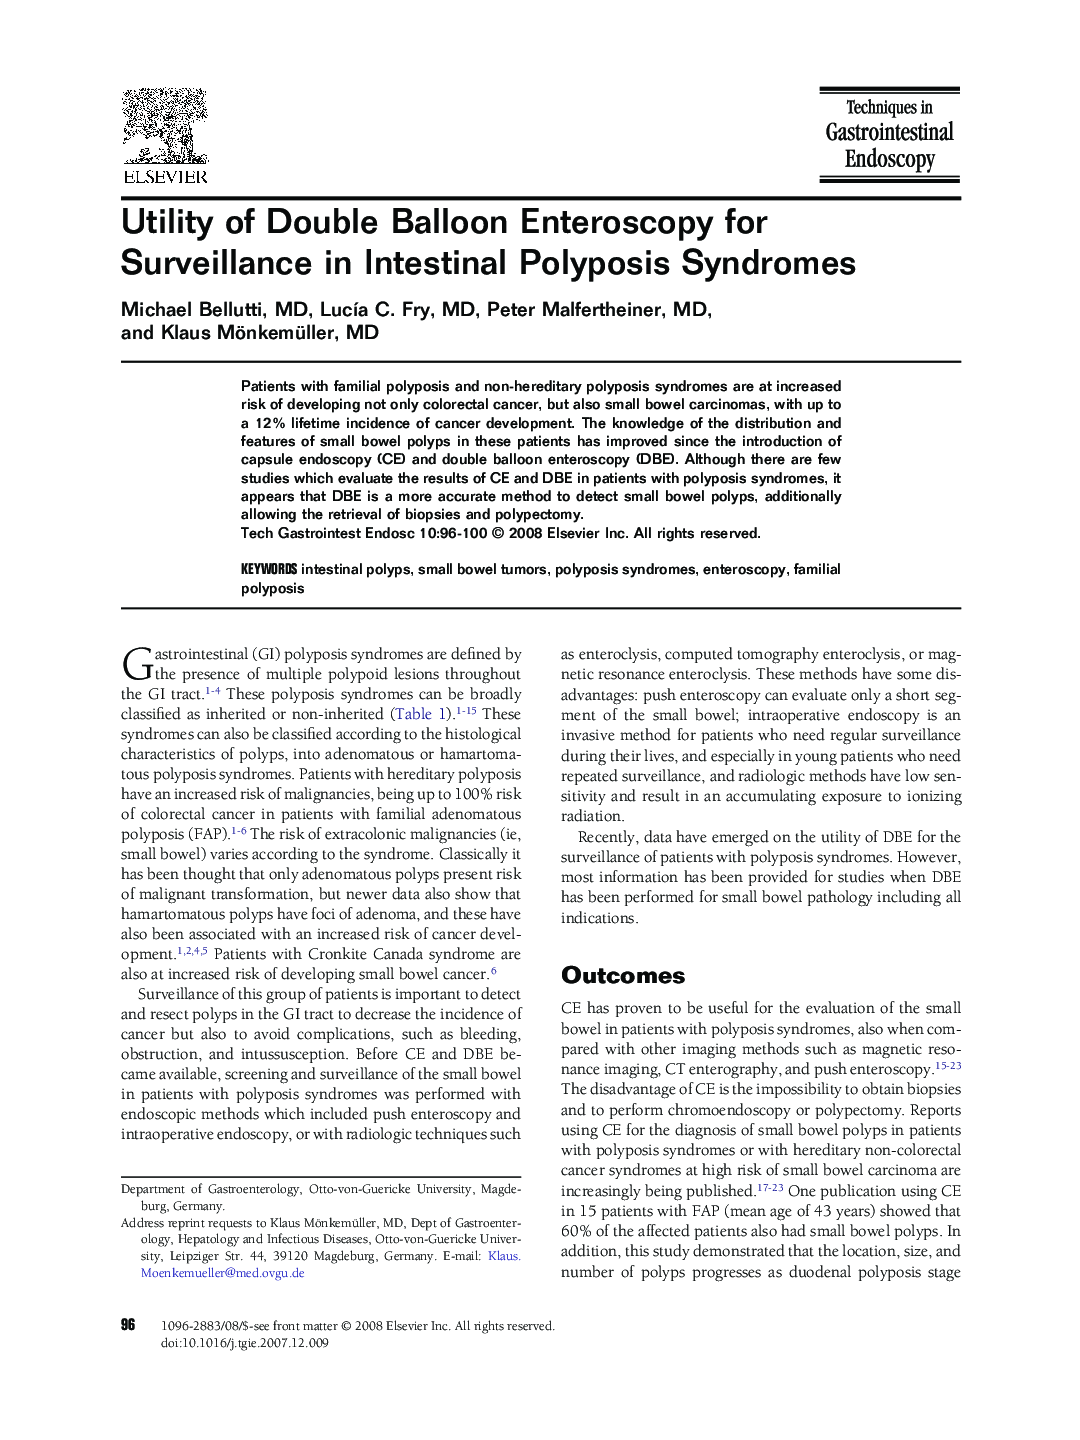 Utility of Double Balloon Enteroscopy for Surveillance in Intestinal Polyposis Syndromes